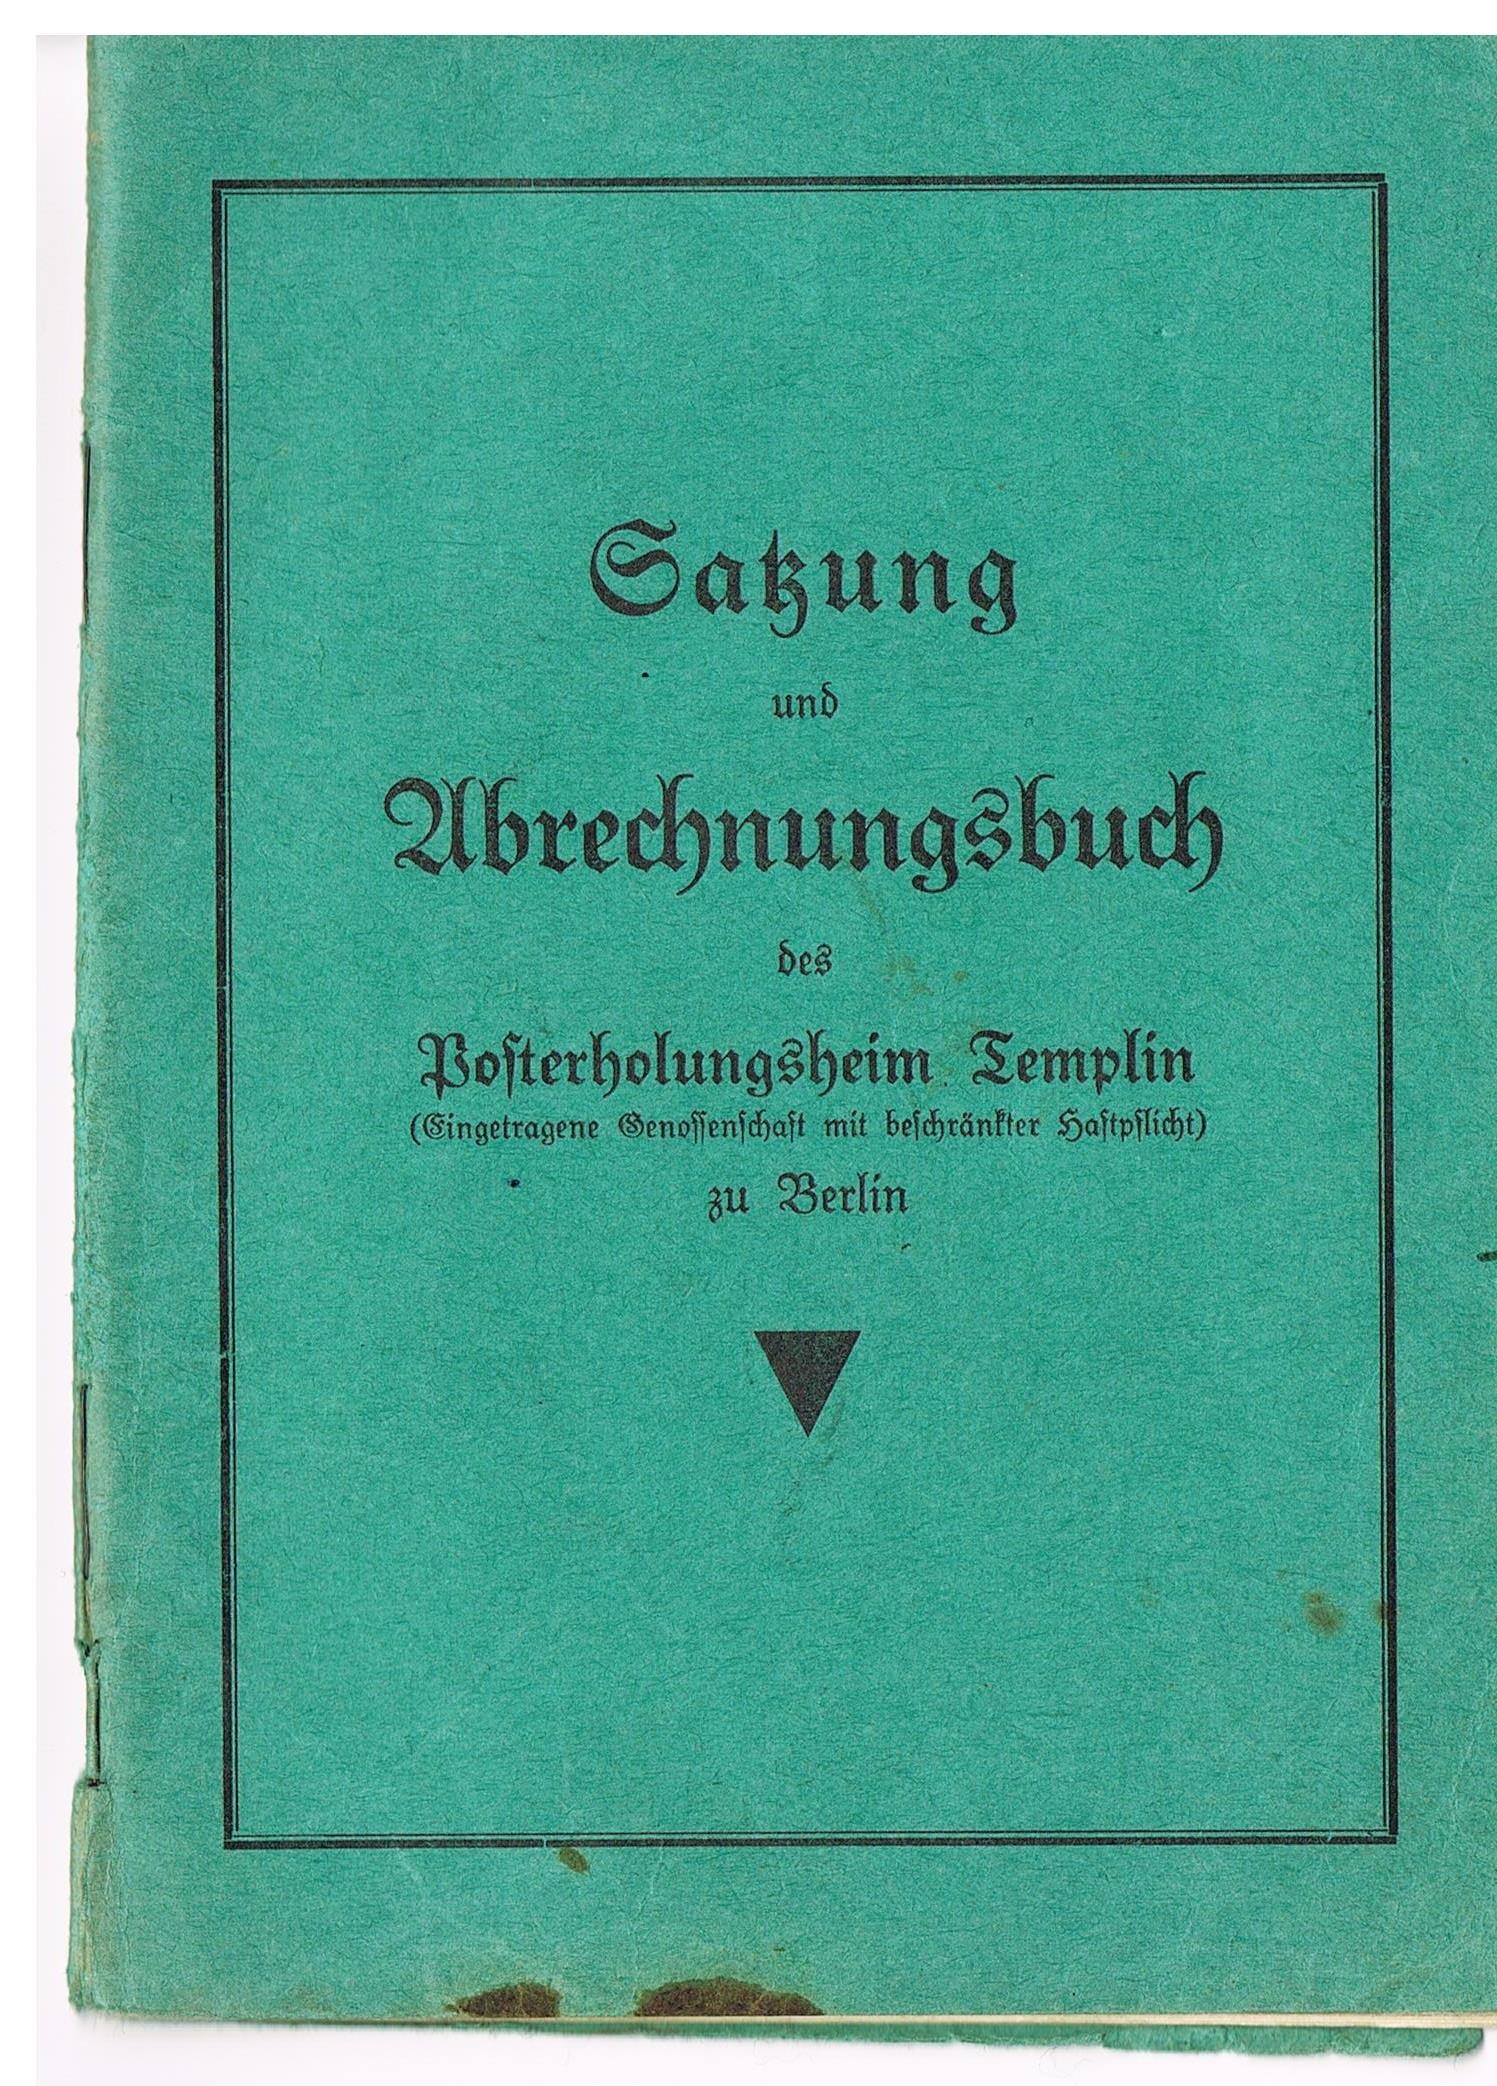 Satzung und Abrechnungsbuch Posterholungsheim (Museum für Stadtgeschichte Templin CC BY-NC-SA)